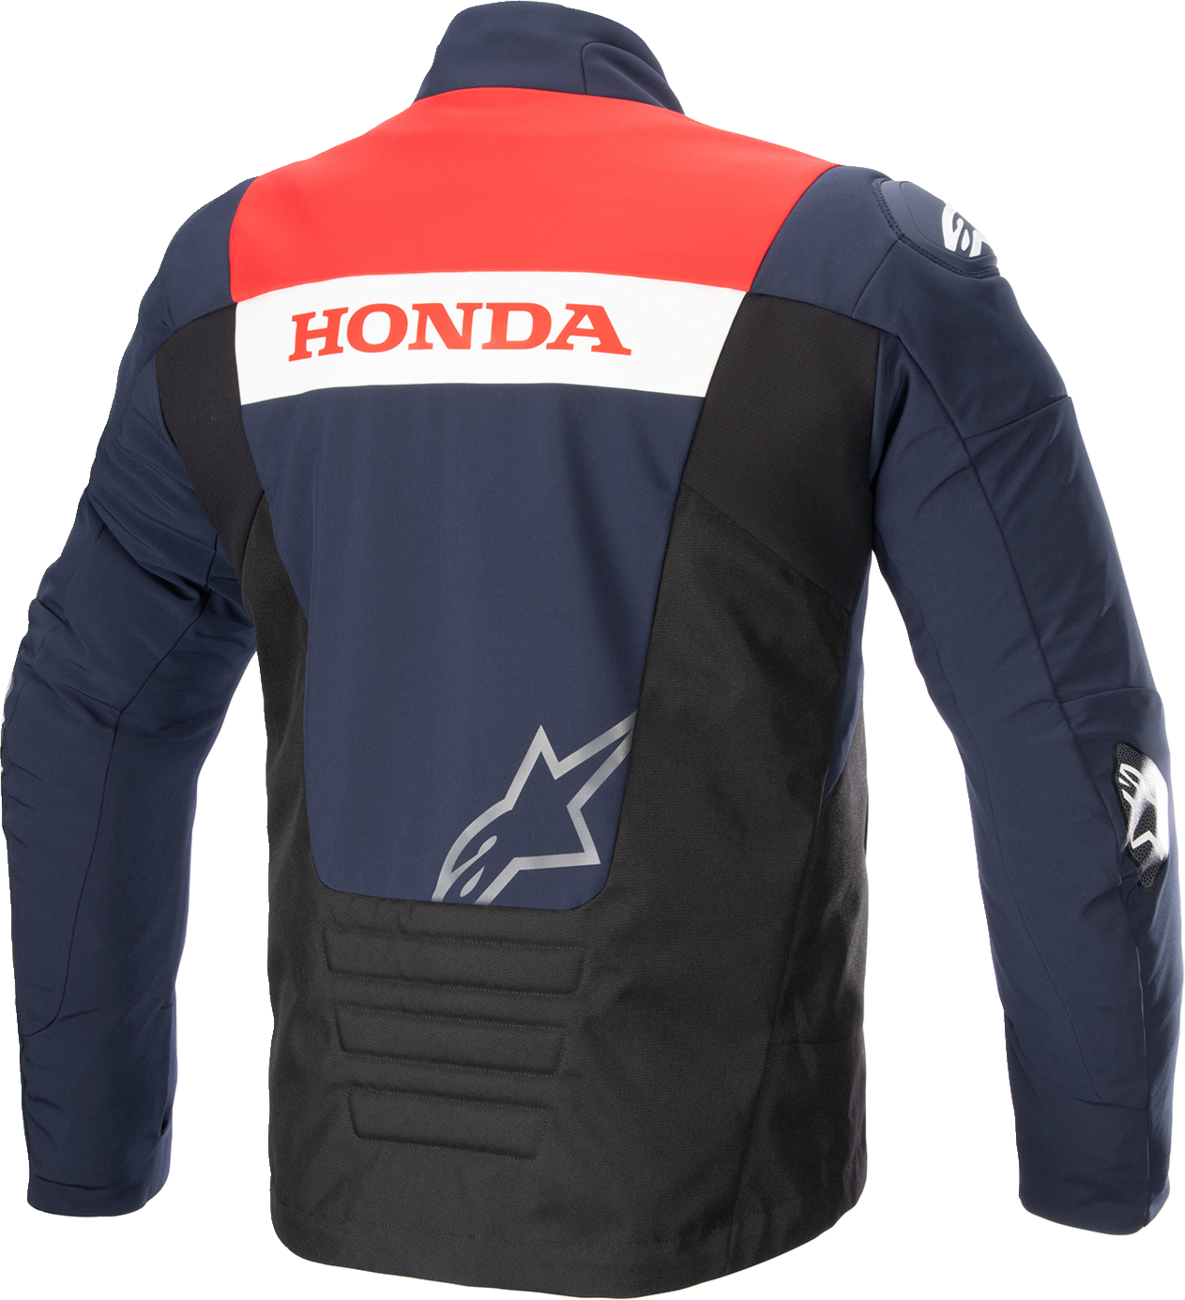 ALPINESTARS Honda SMX Waterproof Jacket - Blue/Black/Red - Large 3206223-7163-L